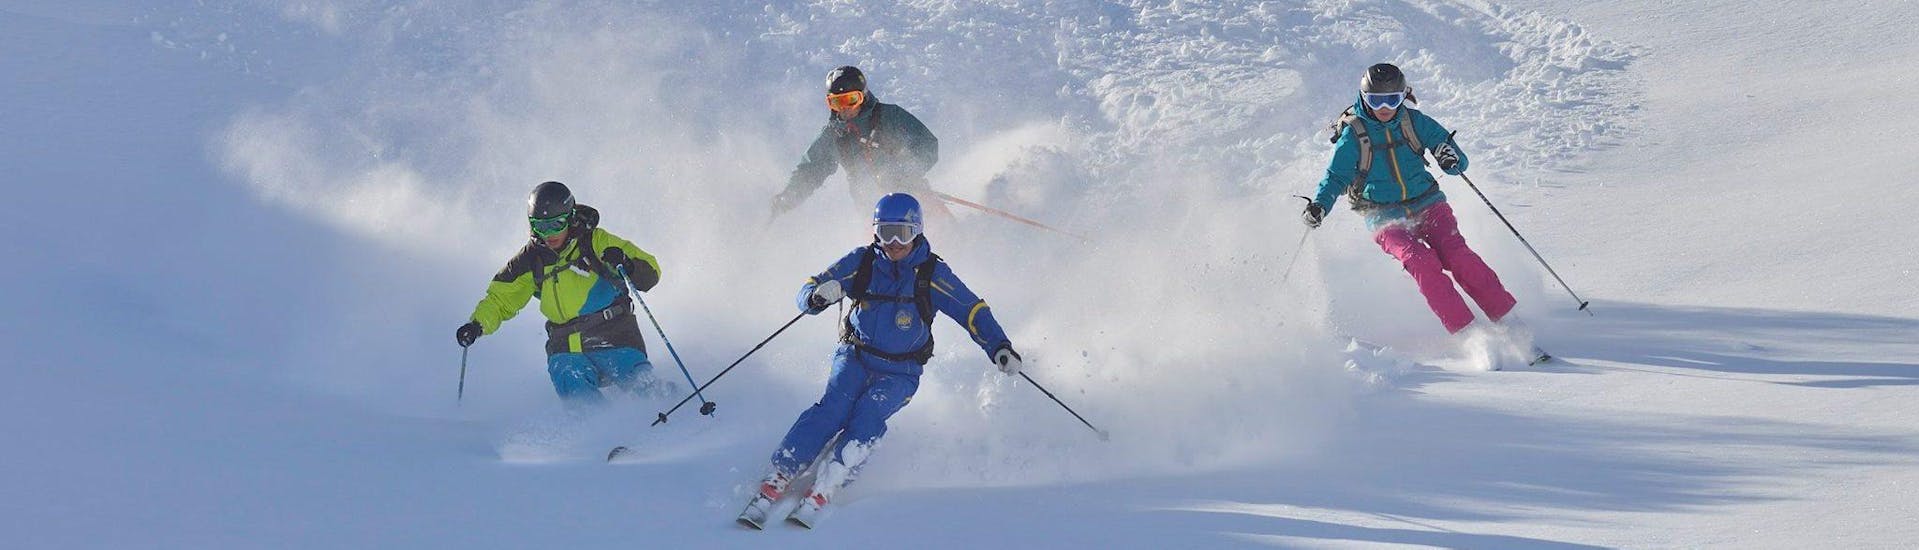 ski-courses-adults-all-levels-hero